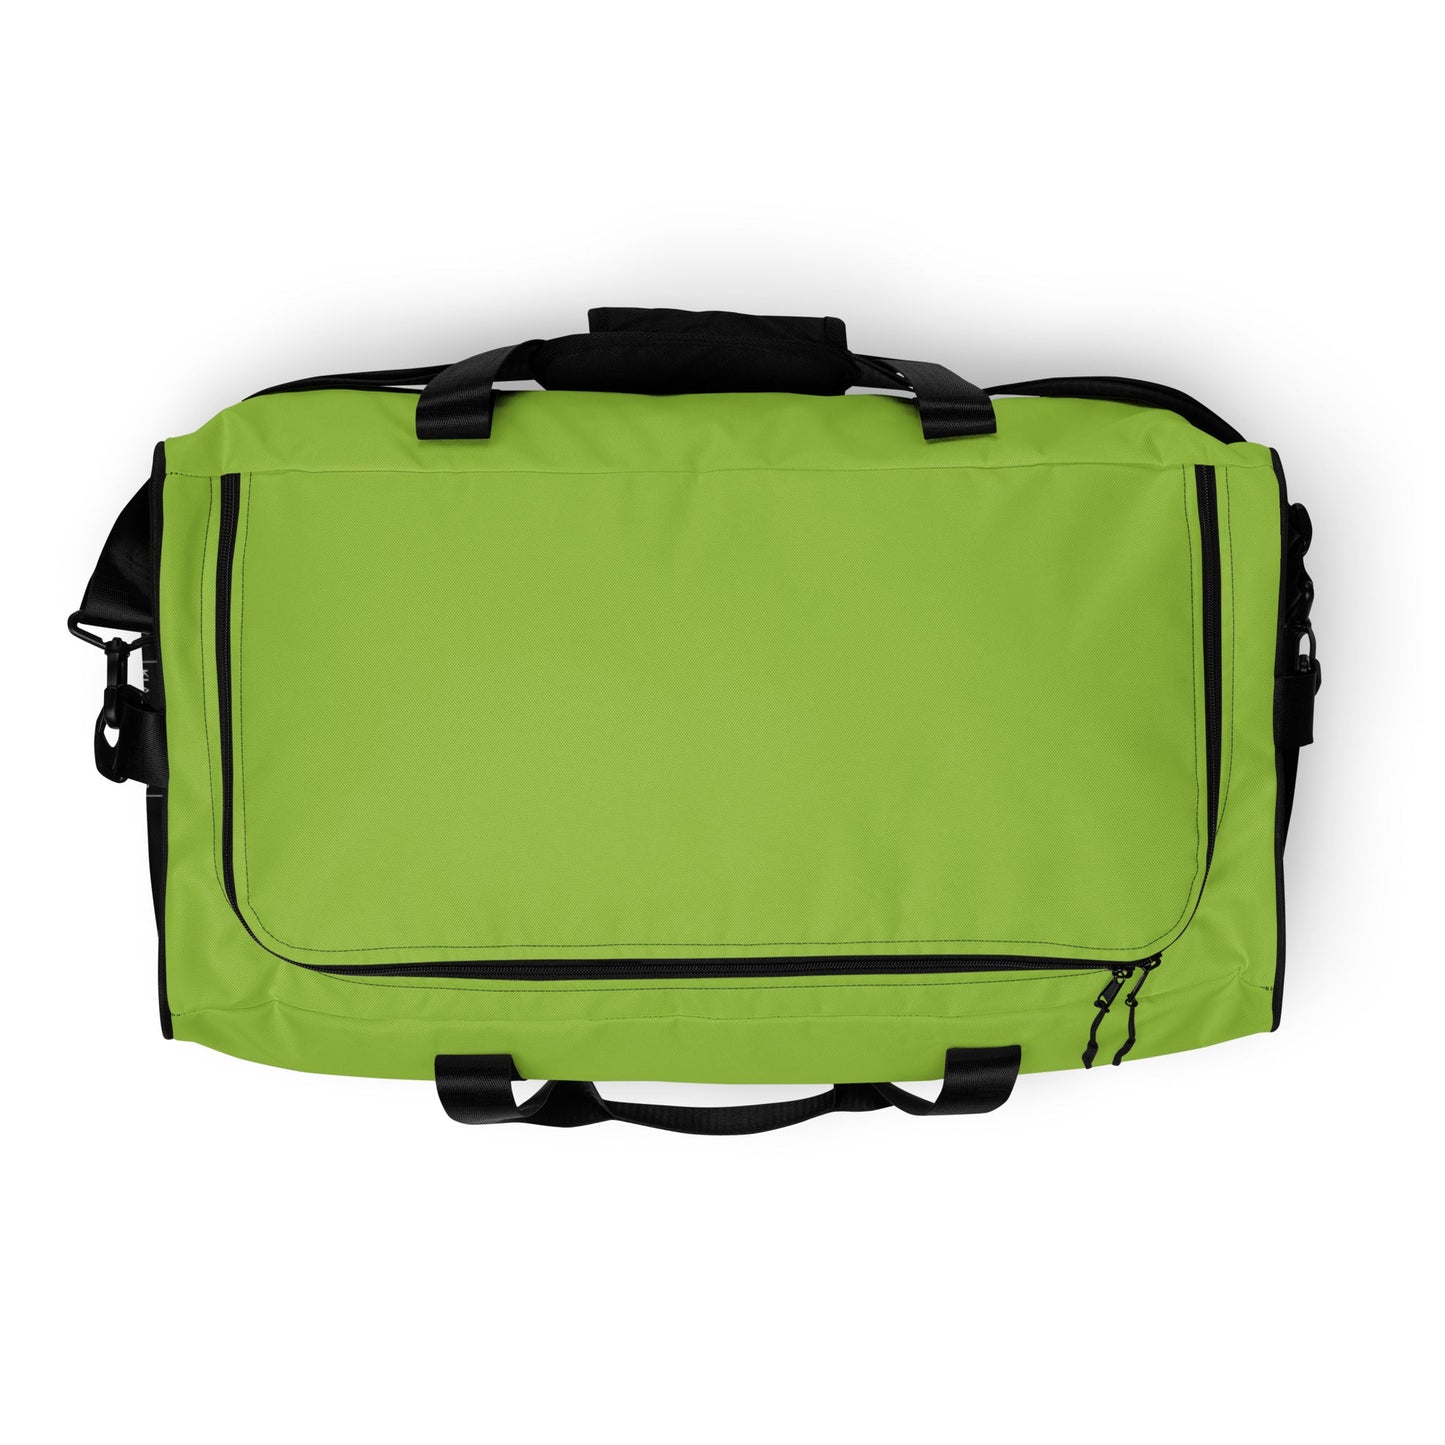 klasneakers KLA duffle bag - Light Olive Lime